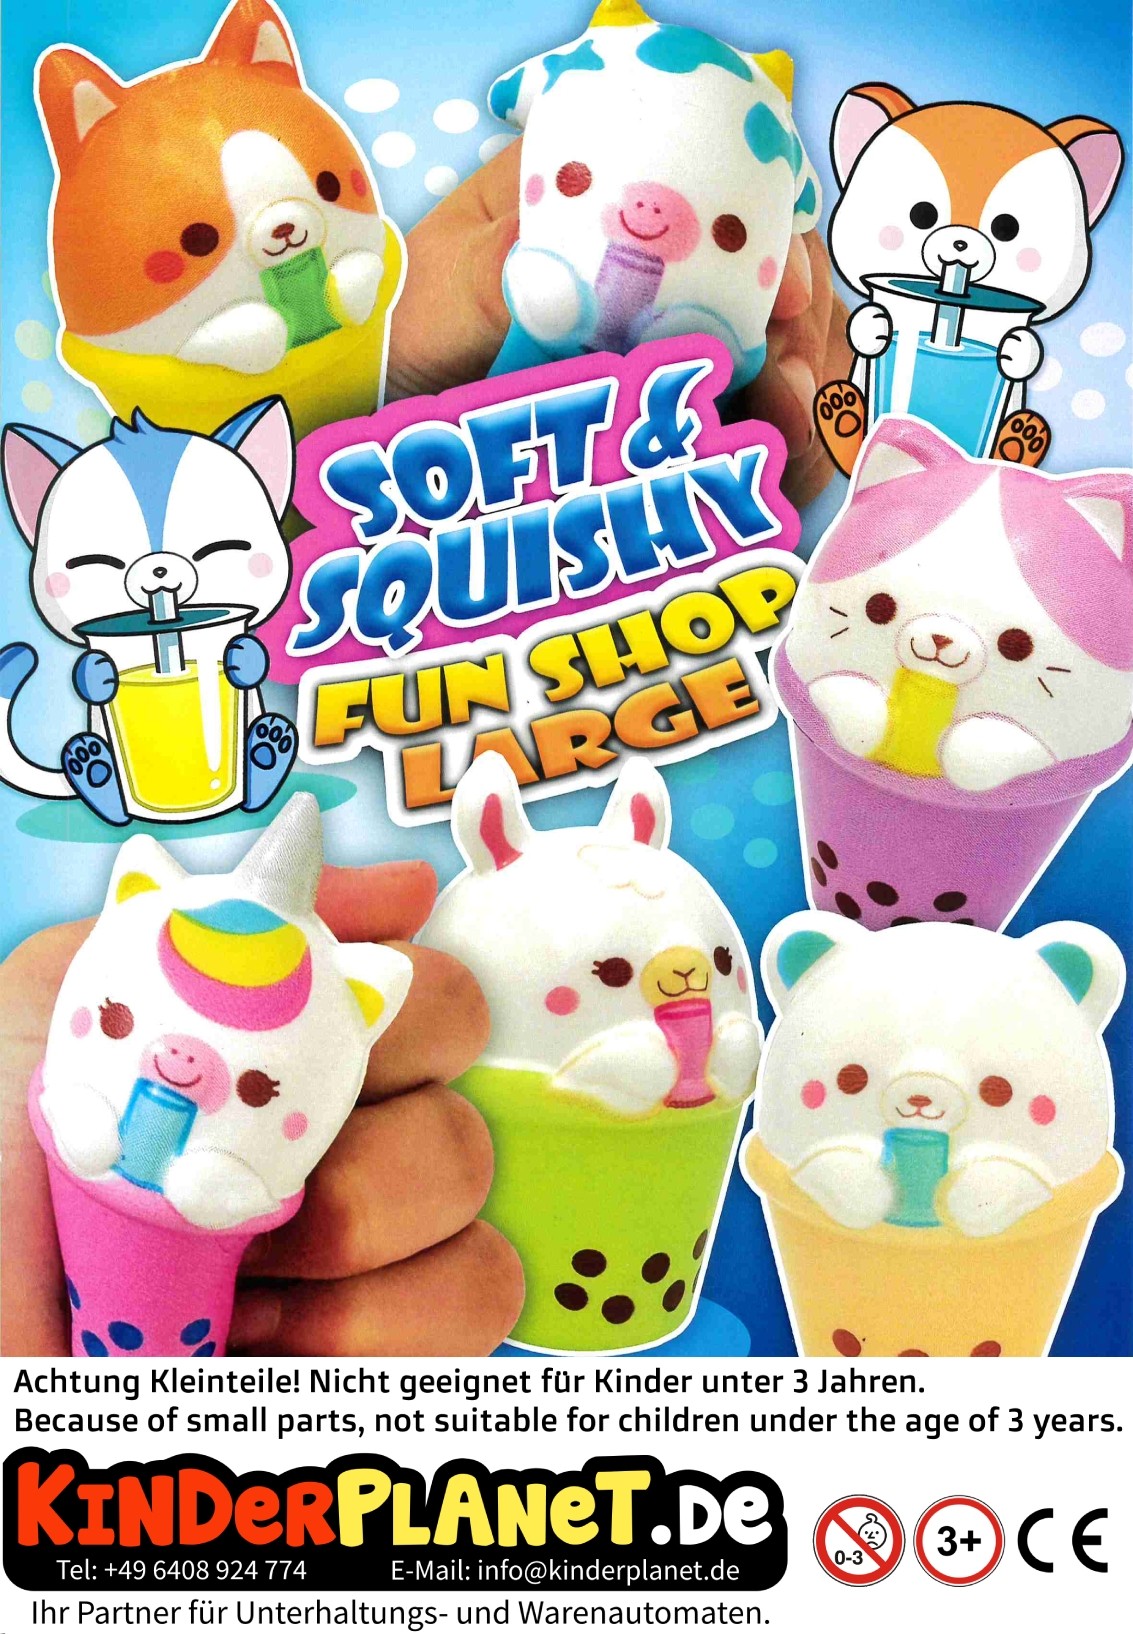 Soft & Squishy Fun Shop Large - in 65mm Kapsel